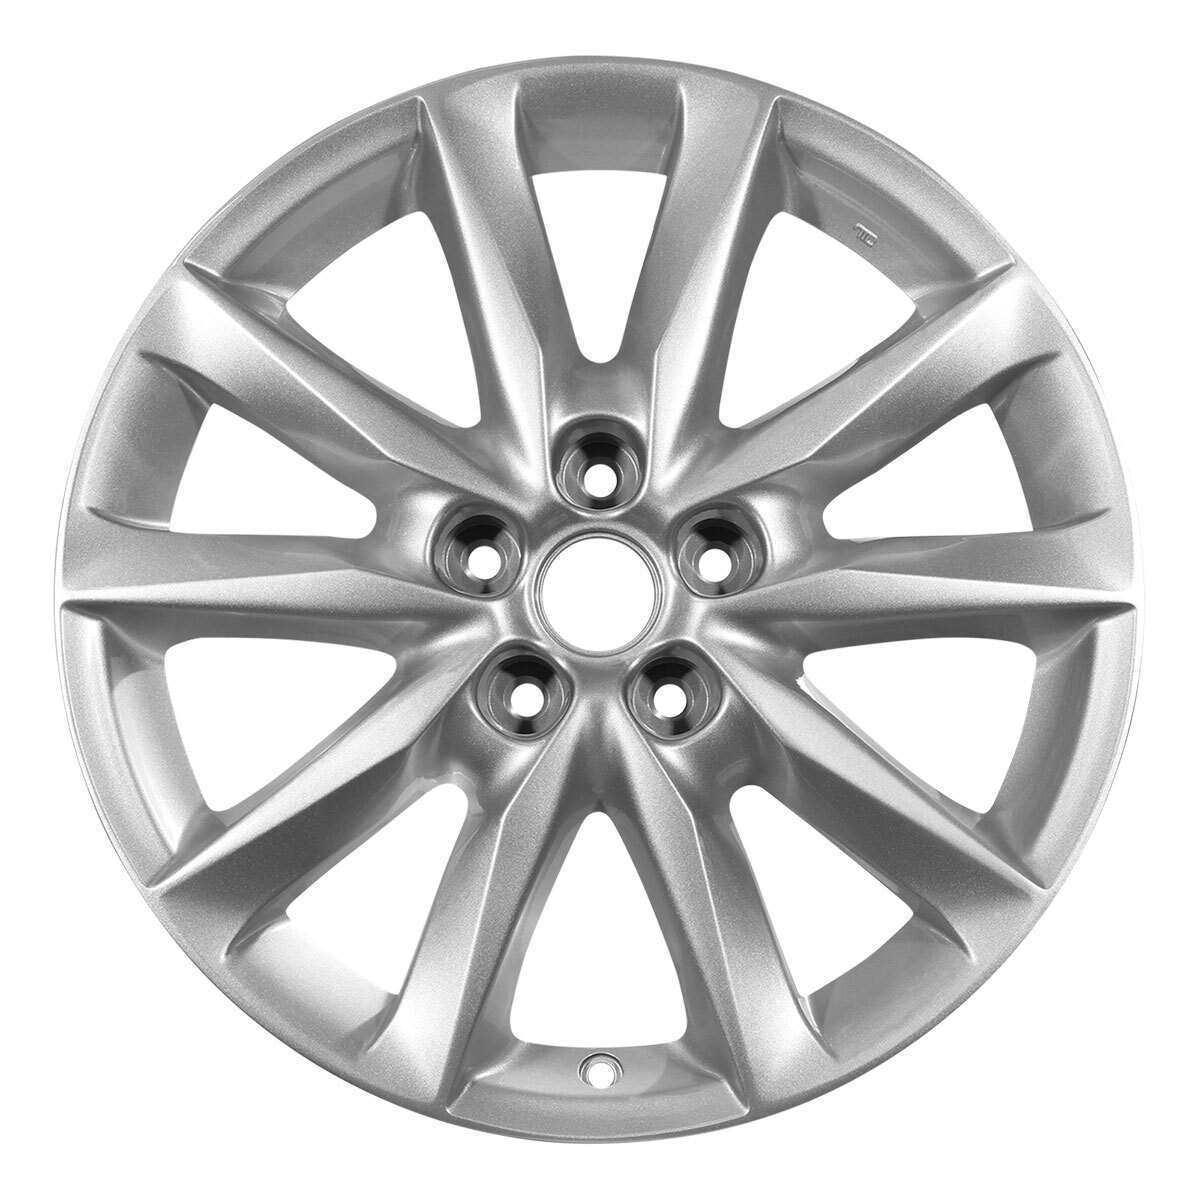 2017 Mazda 3 New 18" Replacement Wheel Rim RW64940S